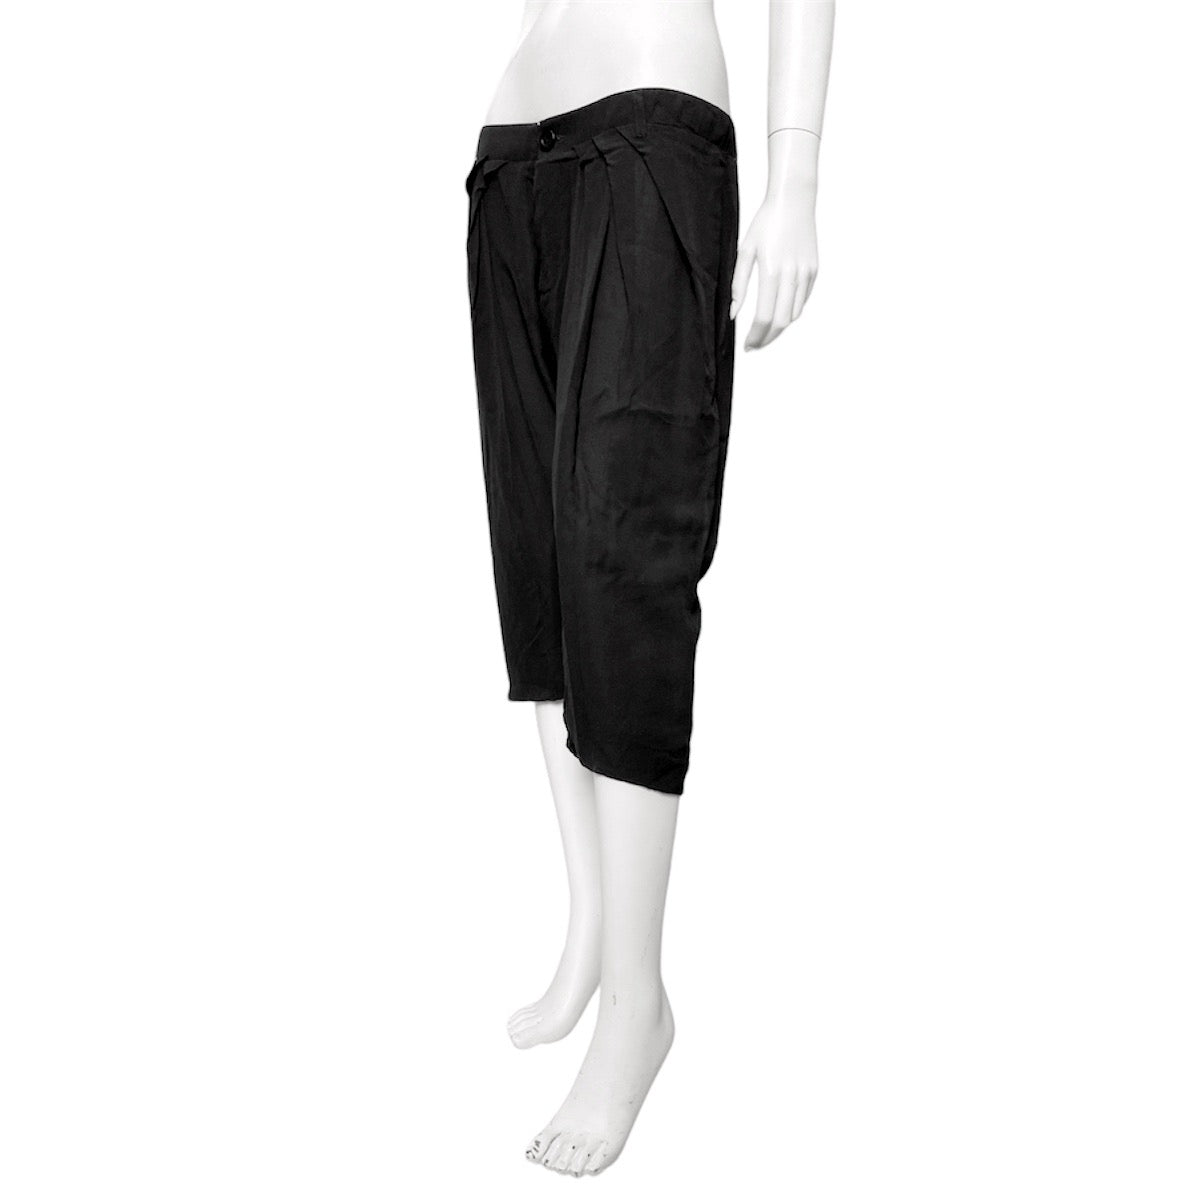 Rick Owens Drop-Crotch Silk Shorts 33"